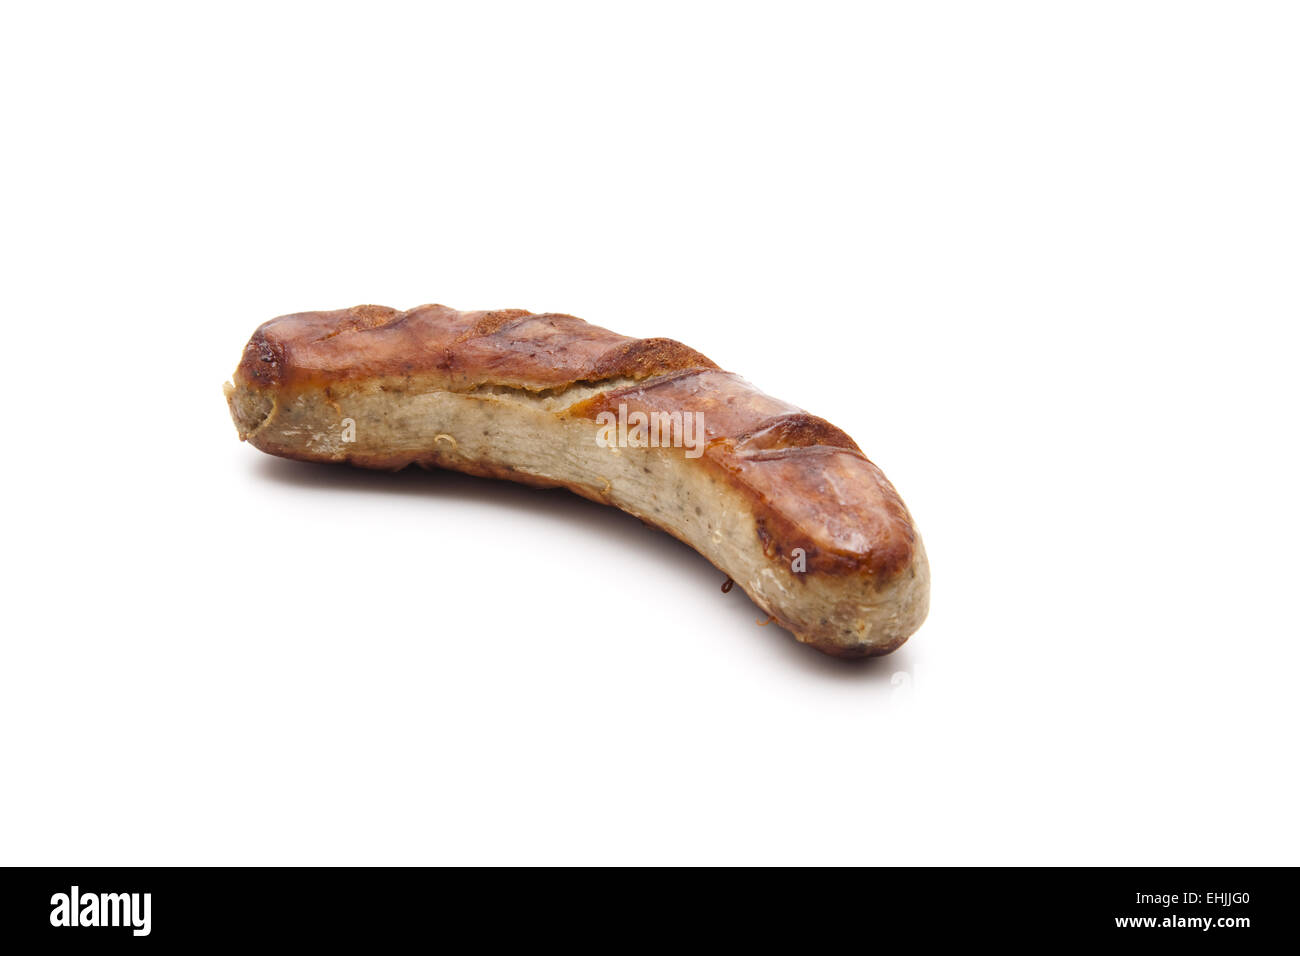 Fried sausage roasted Stock Photo